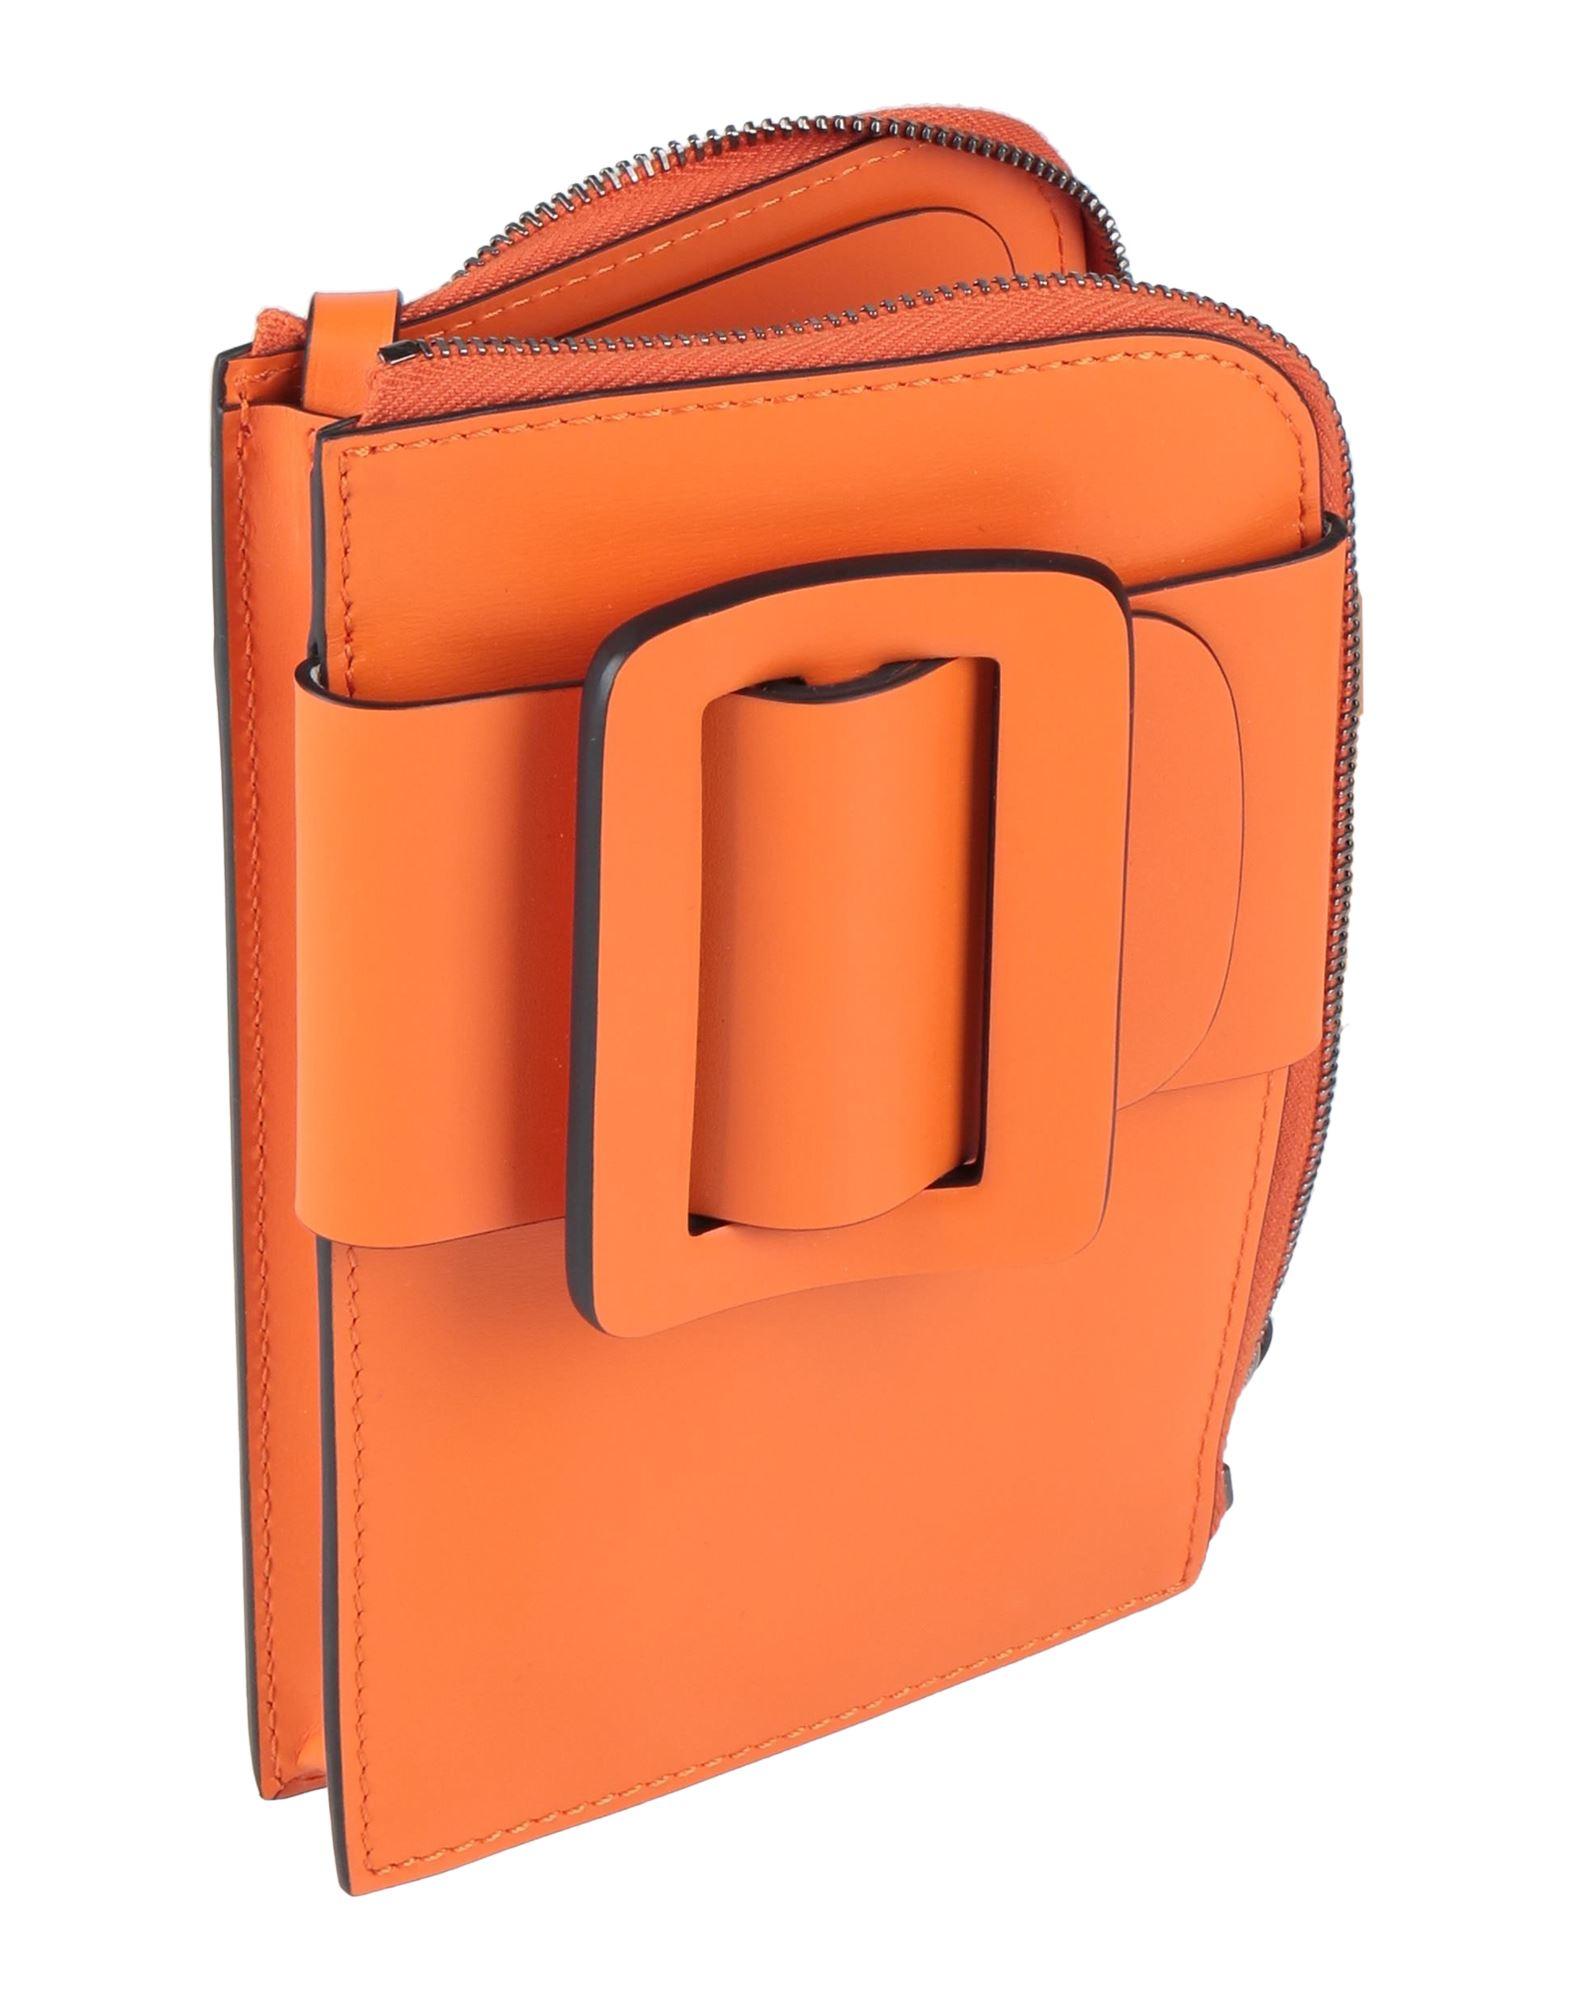 Boyy Cross-body Bag in Orange